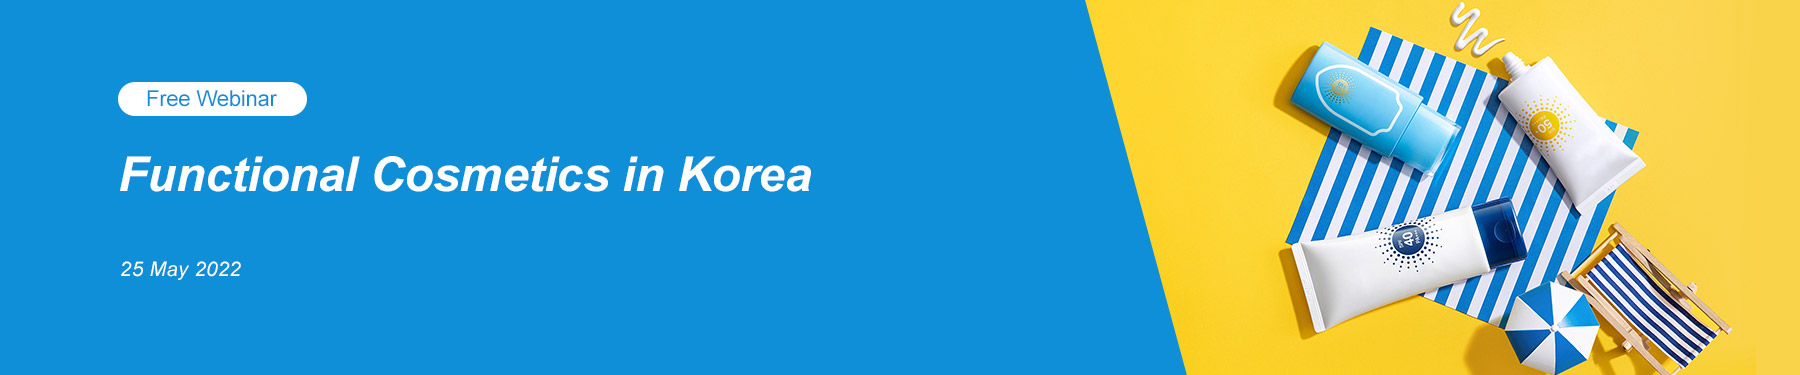 Korea,Cosmetic,Regulation,Registration,Webinar,Free